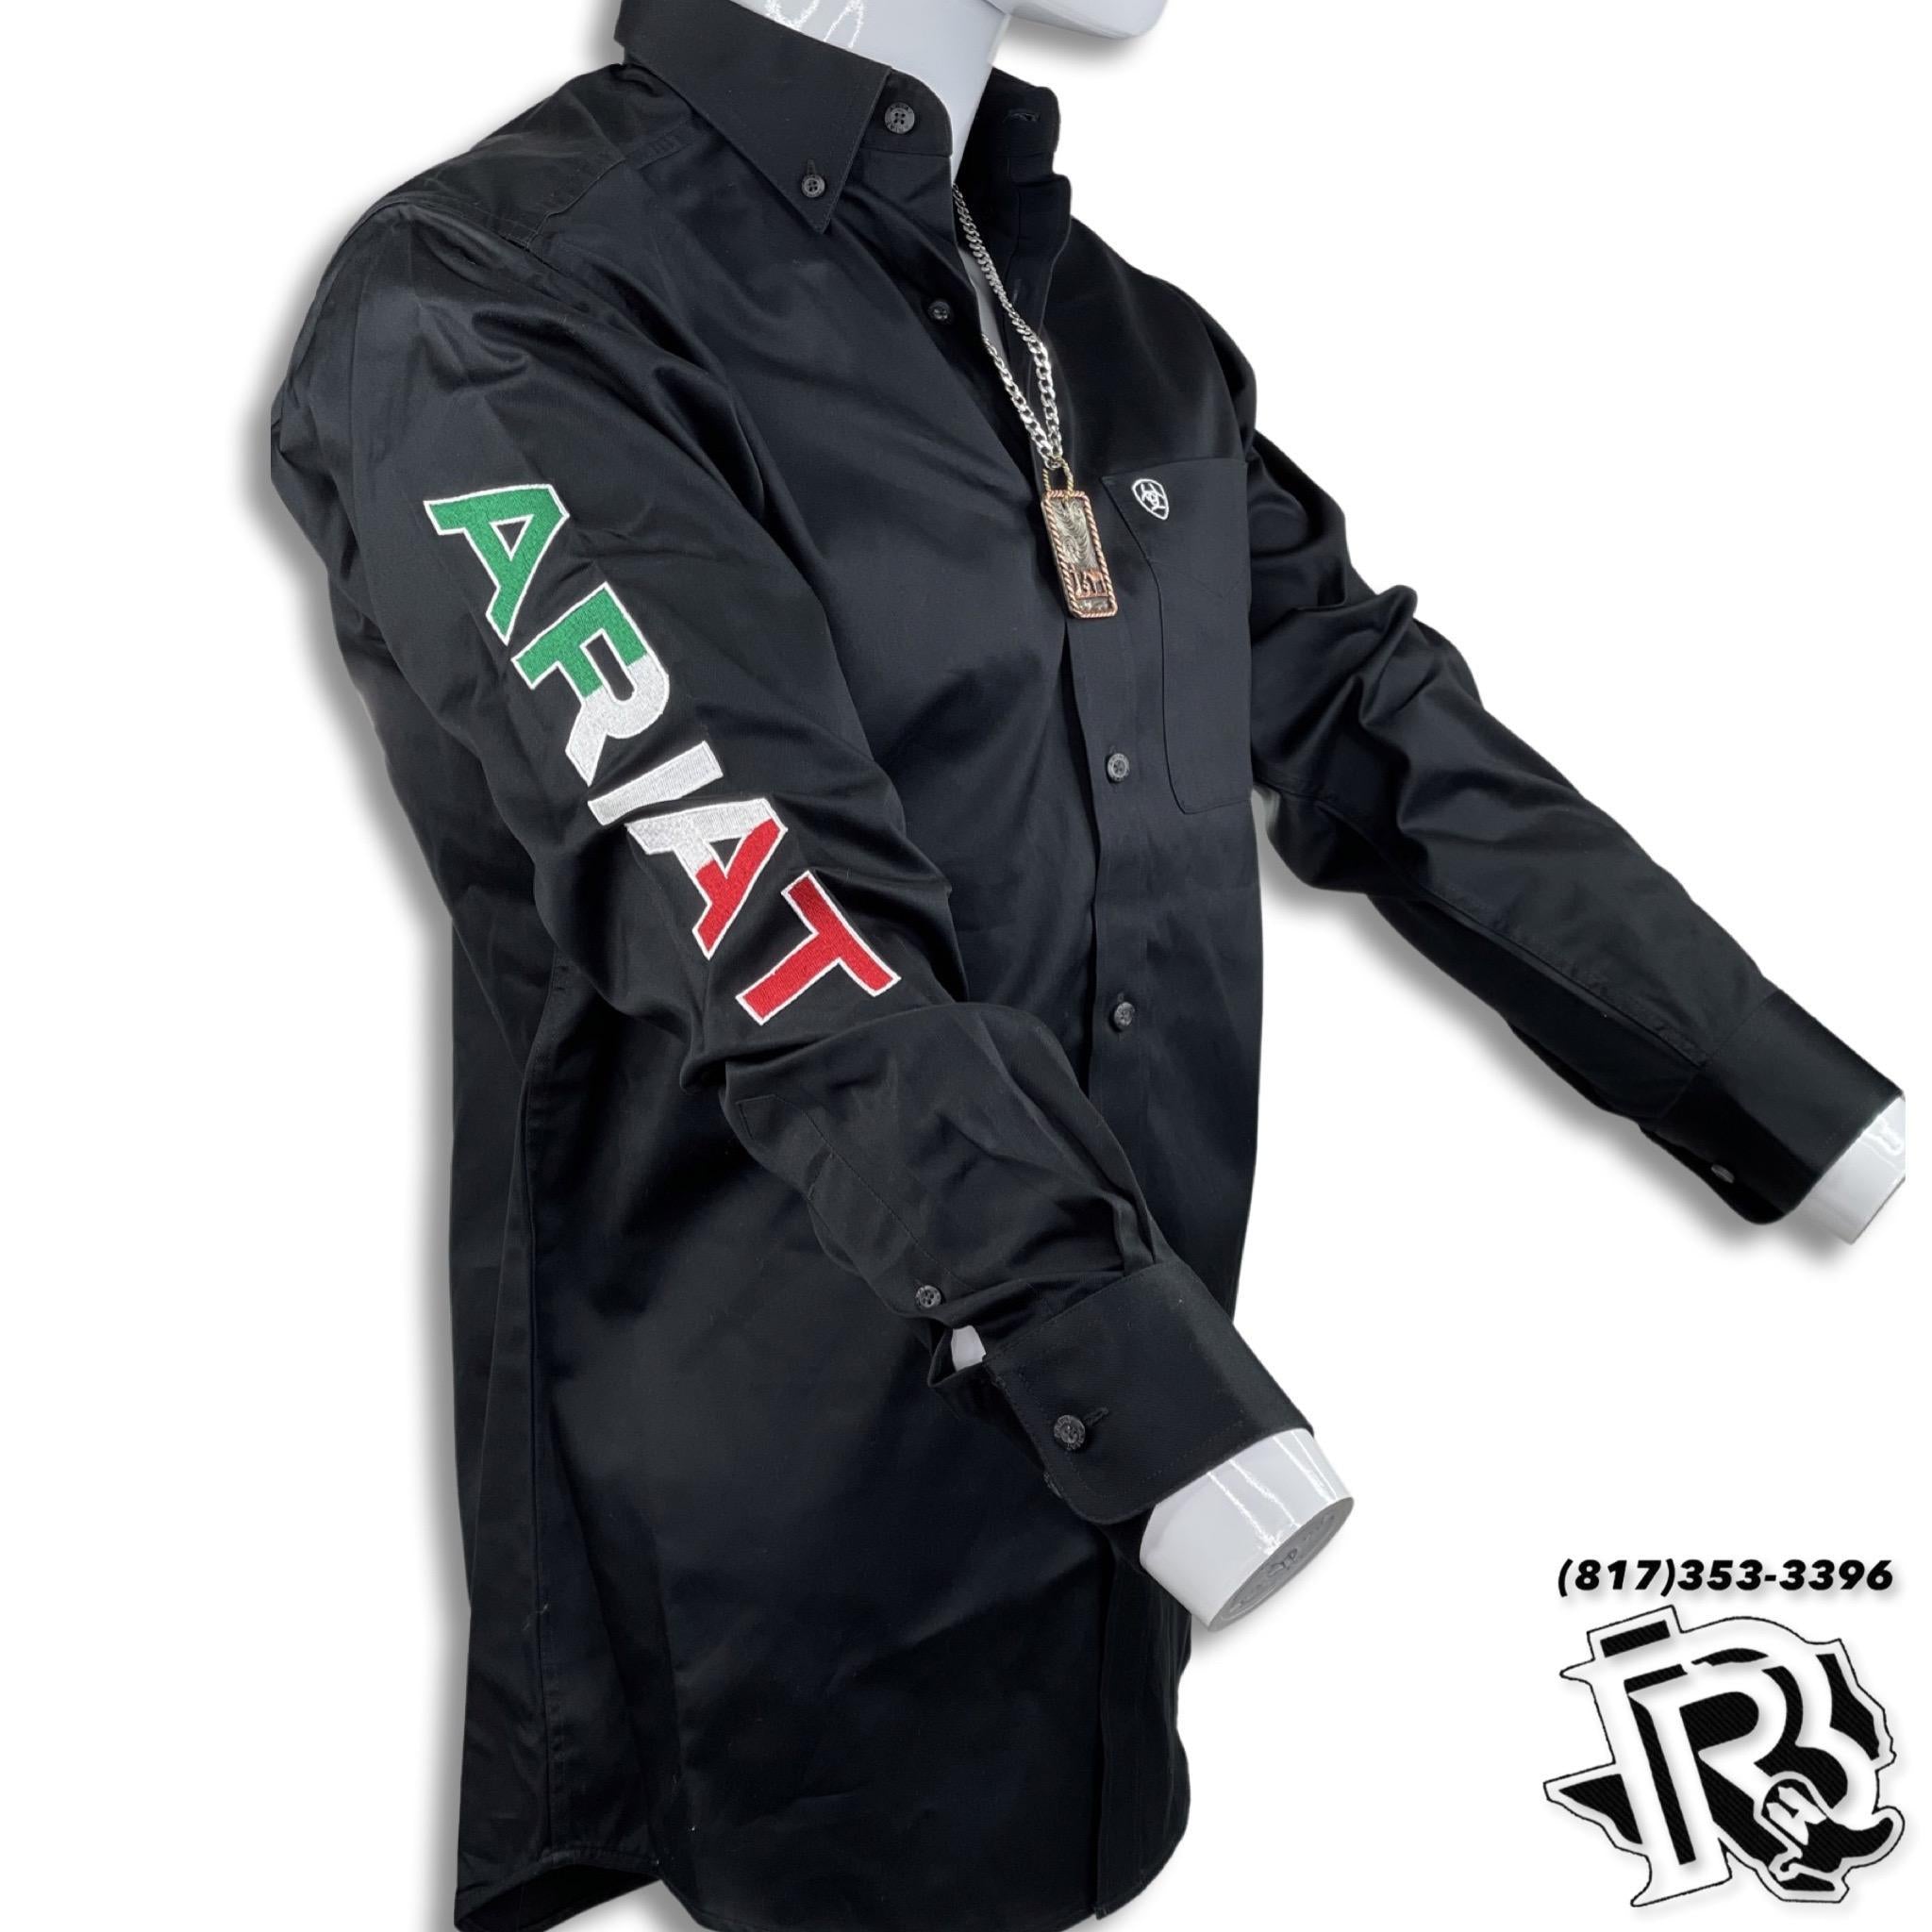 Ariat Men's Team Logo Twill Classic Fit Shirt, Black Mexico